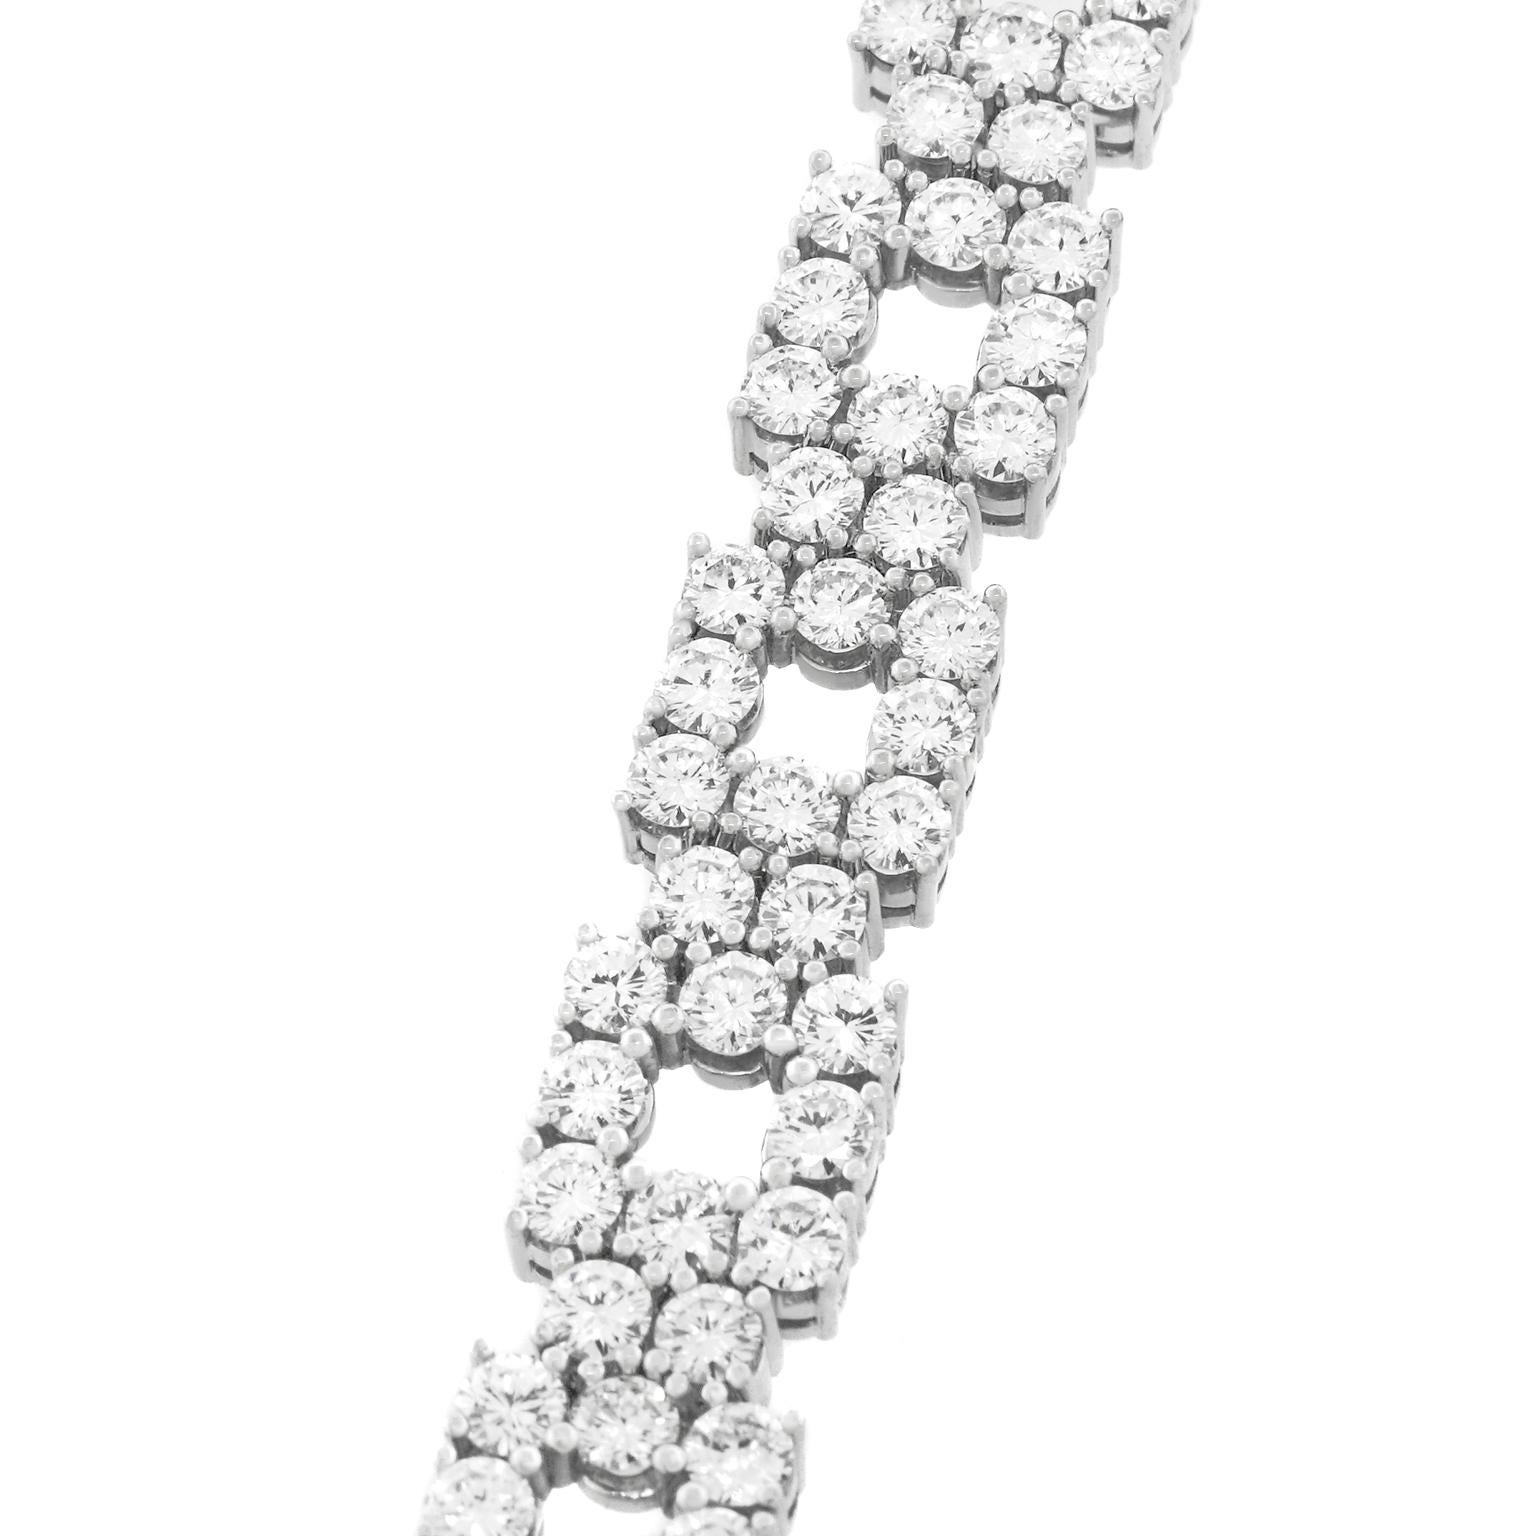 Spectacular Swiss Modern Diamond Bracelet by Paul Binder For Sale 2